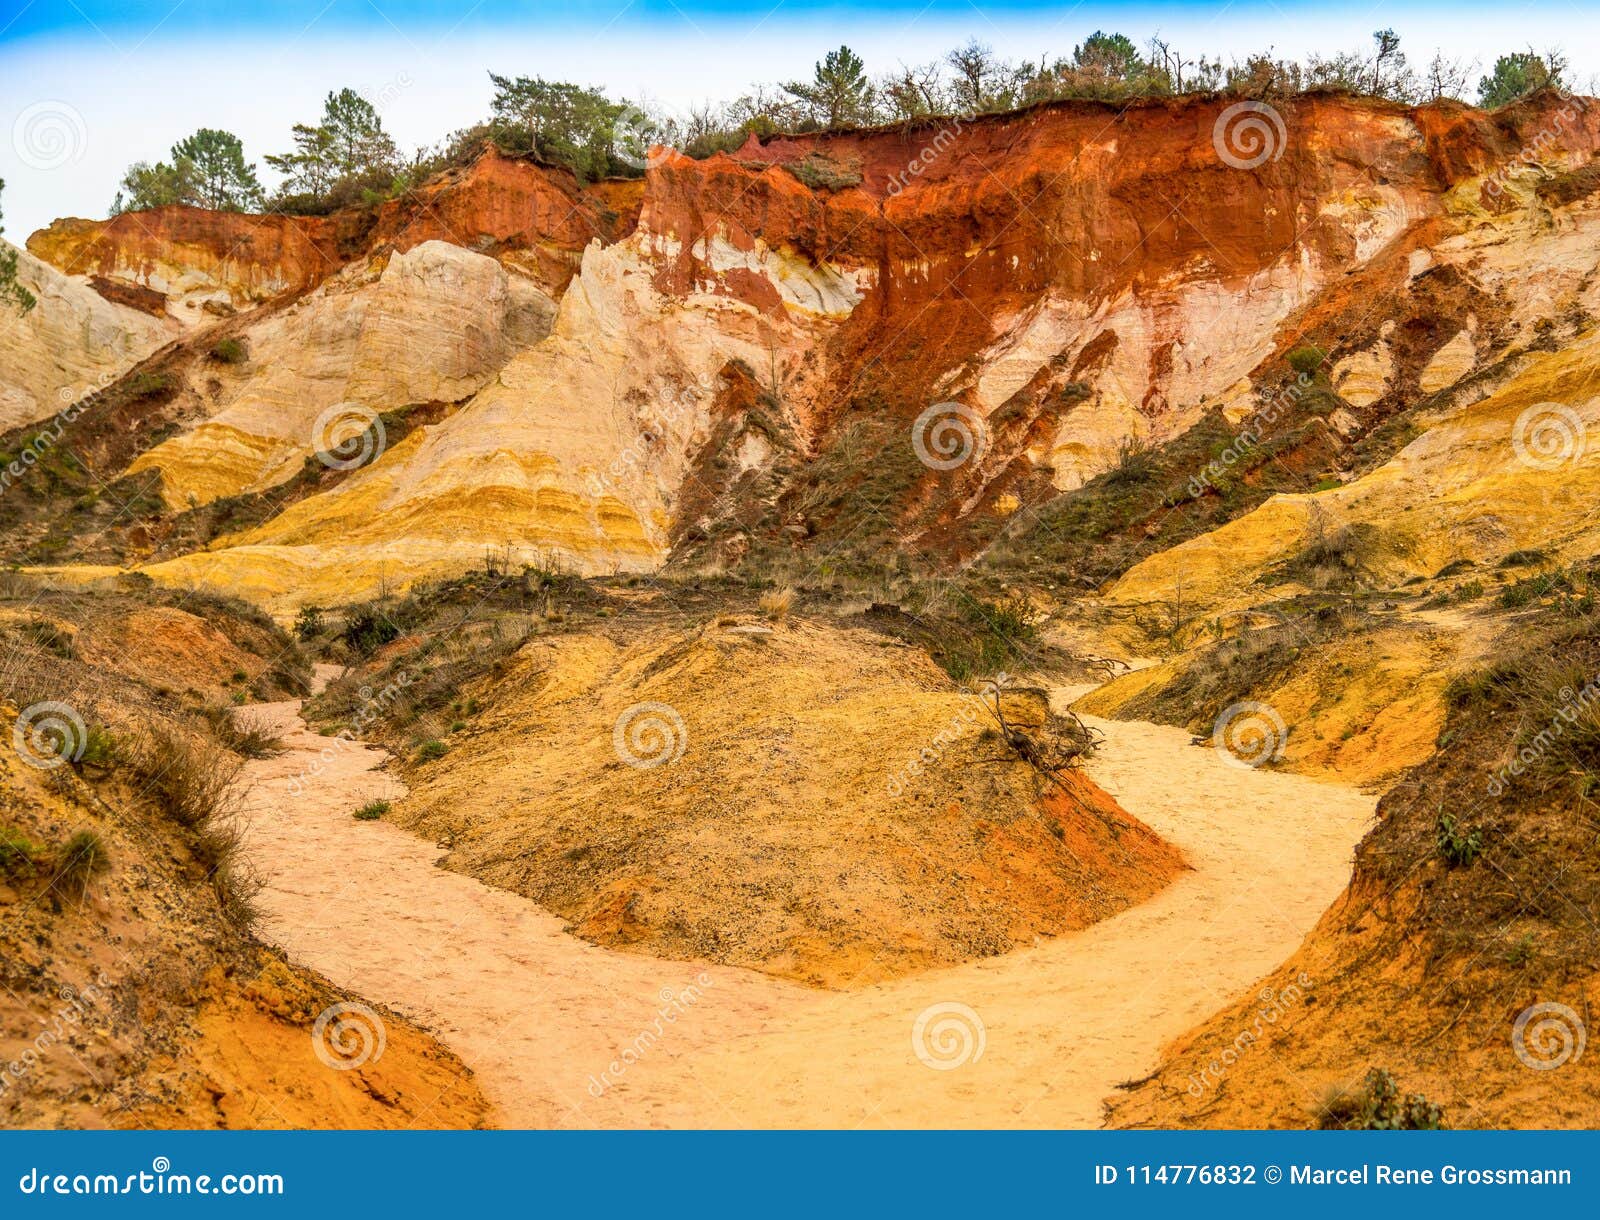 the ocher quarries of rustrel